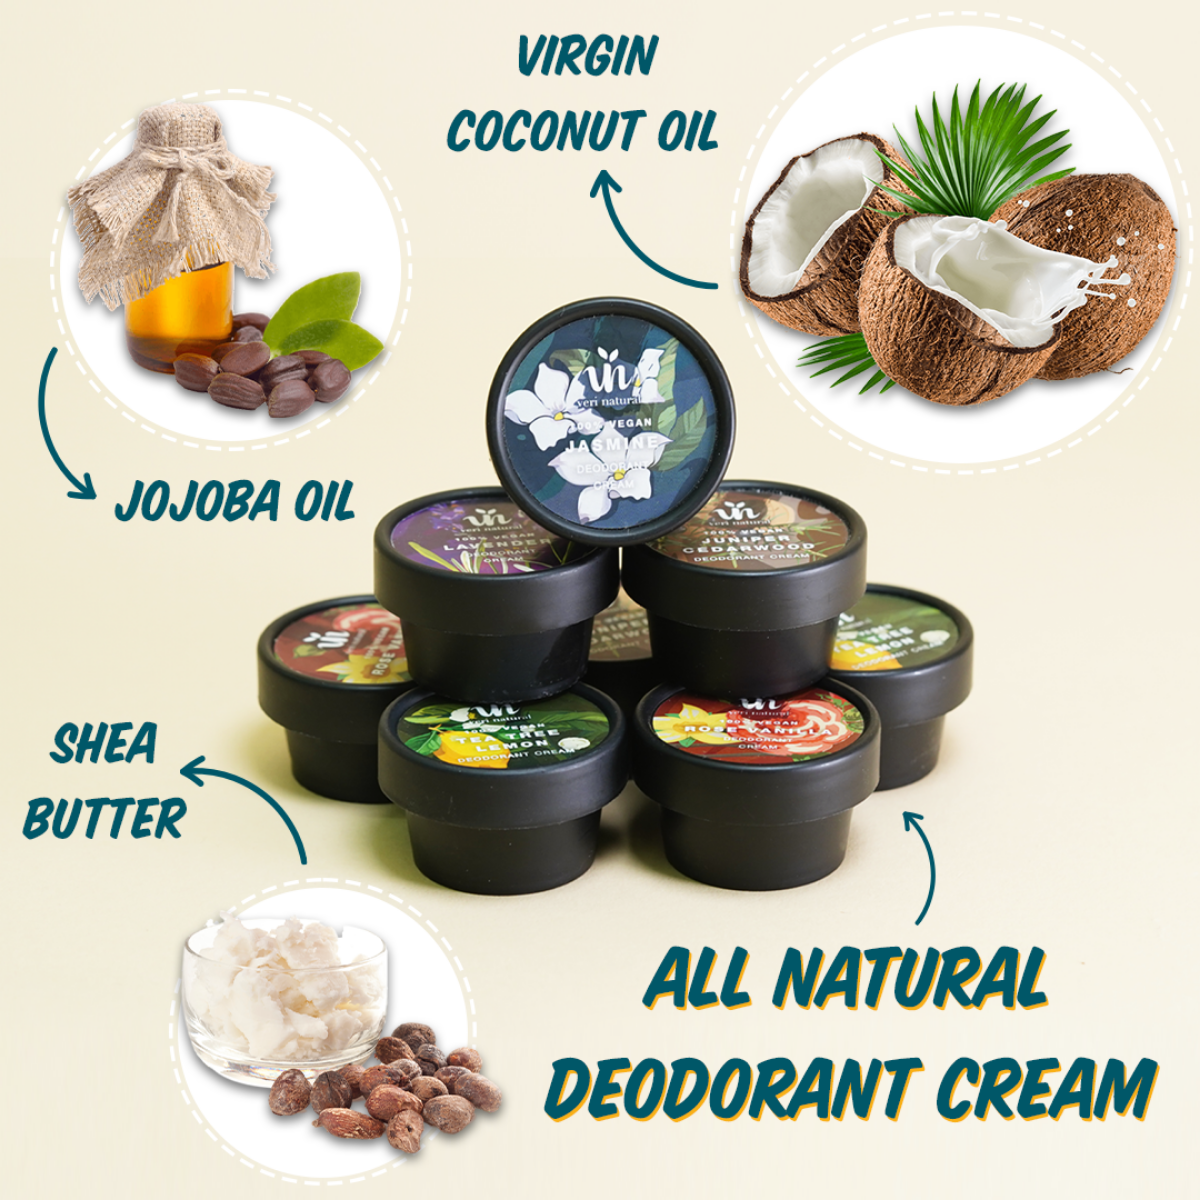 Juniper Cedarwood Deodorant Cream